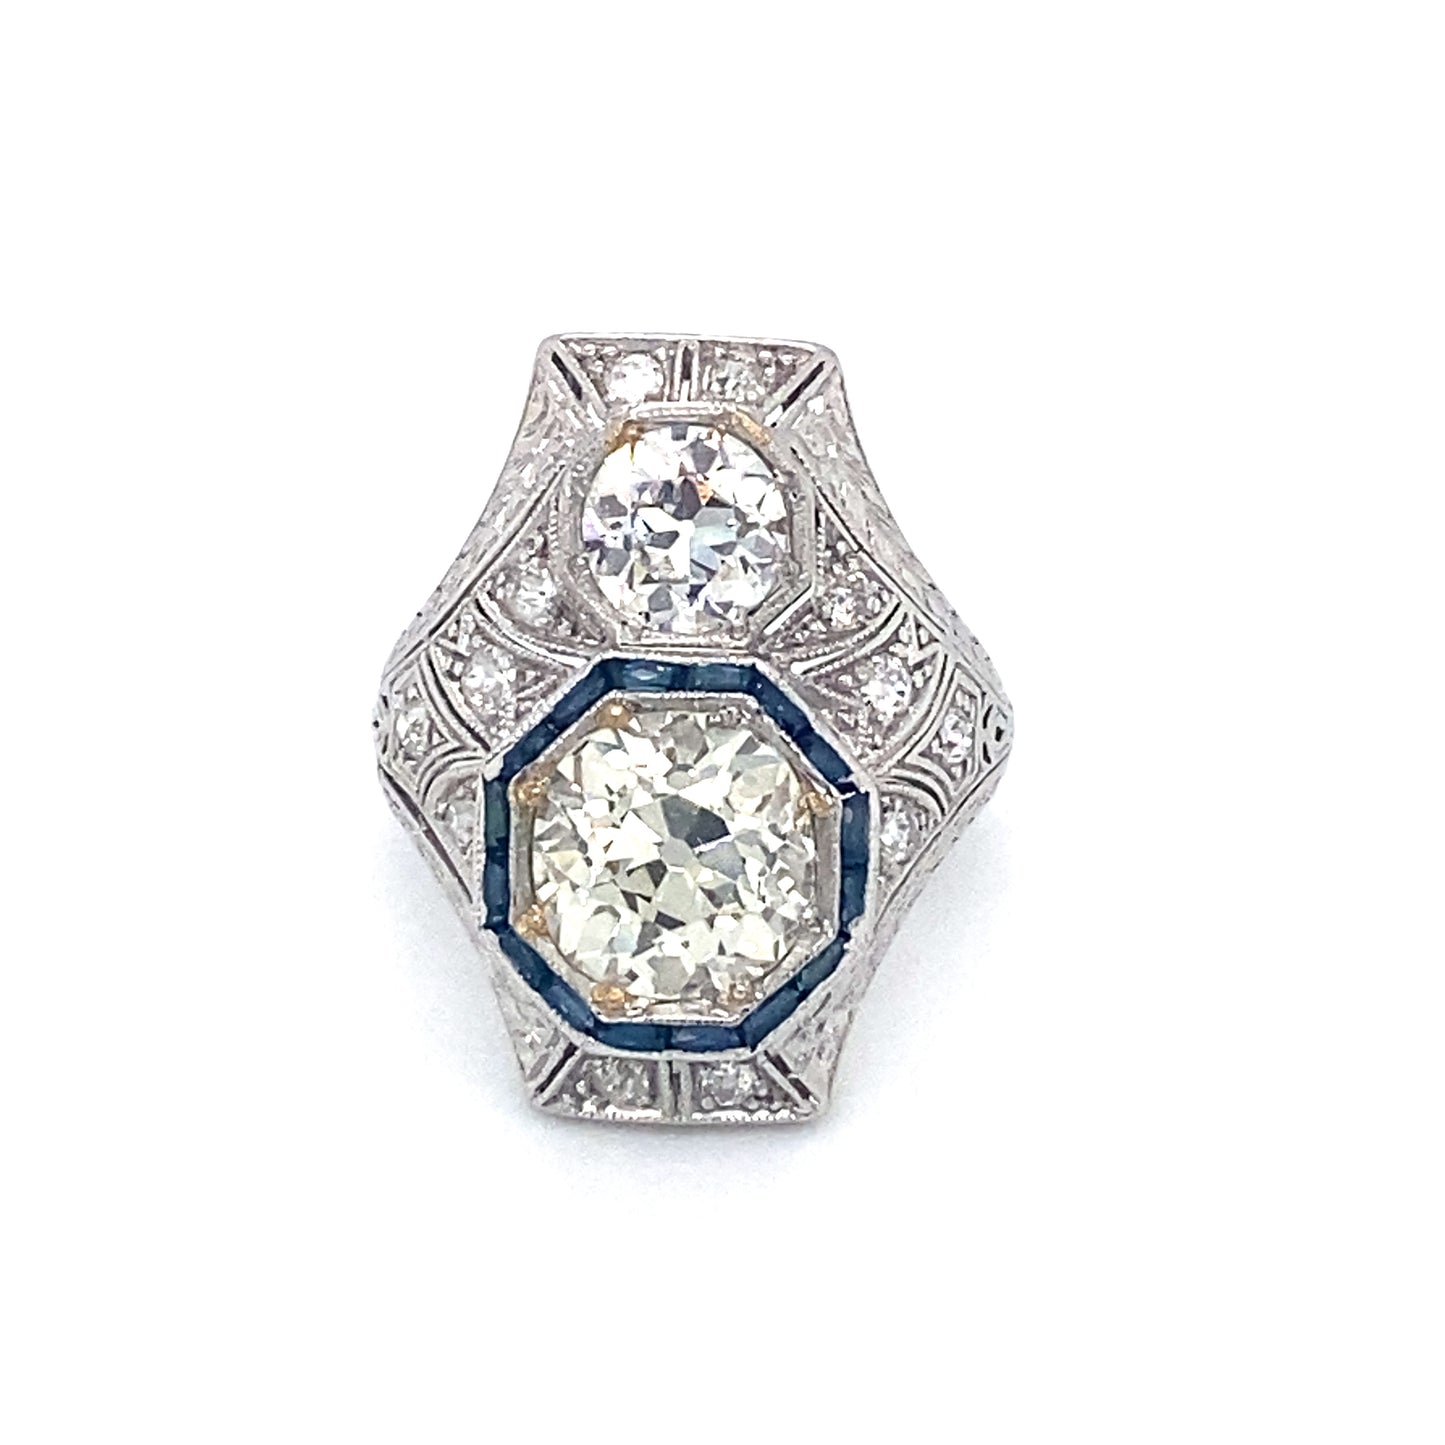 Circa 1920s Art Deco 2.50ct Diamond and Sapphire Cocktail Ring in Platinum